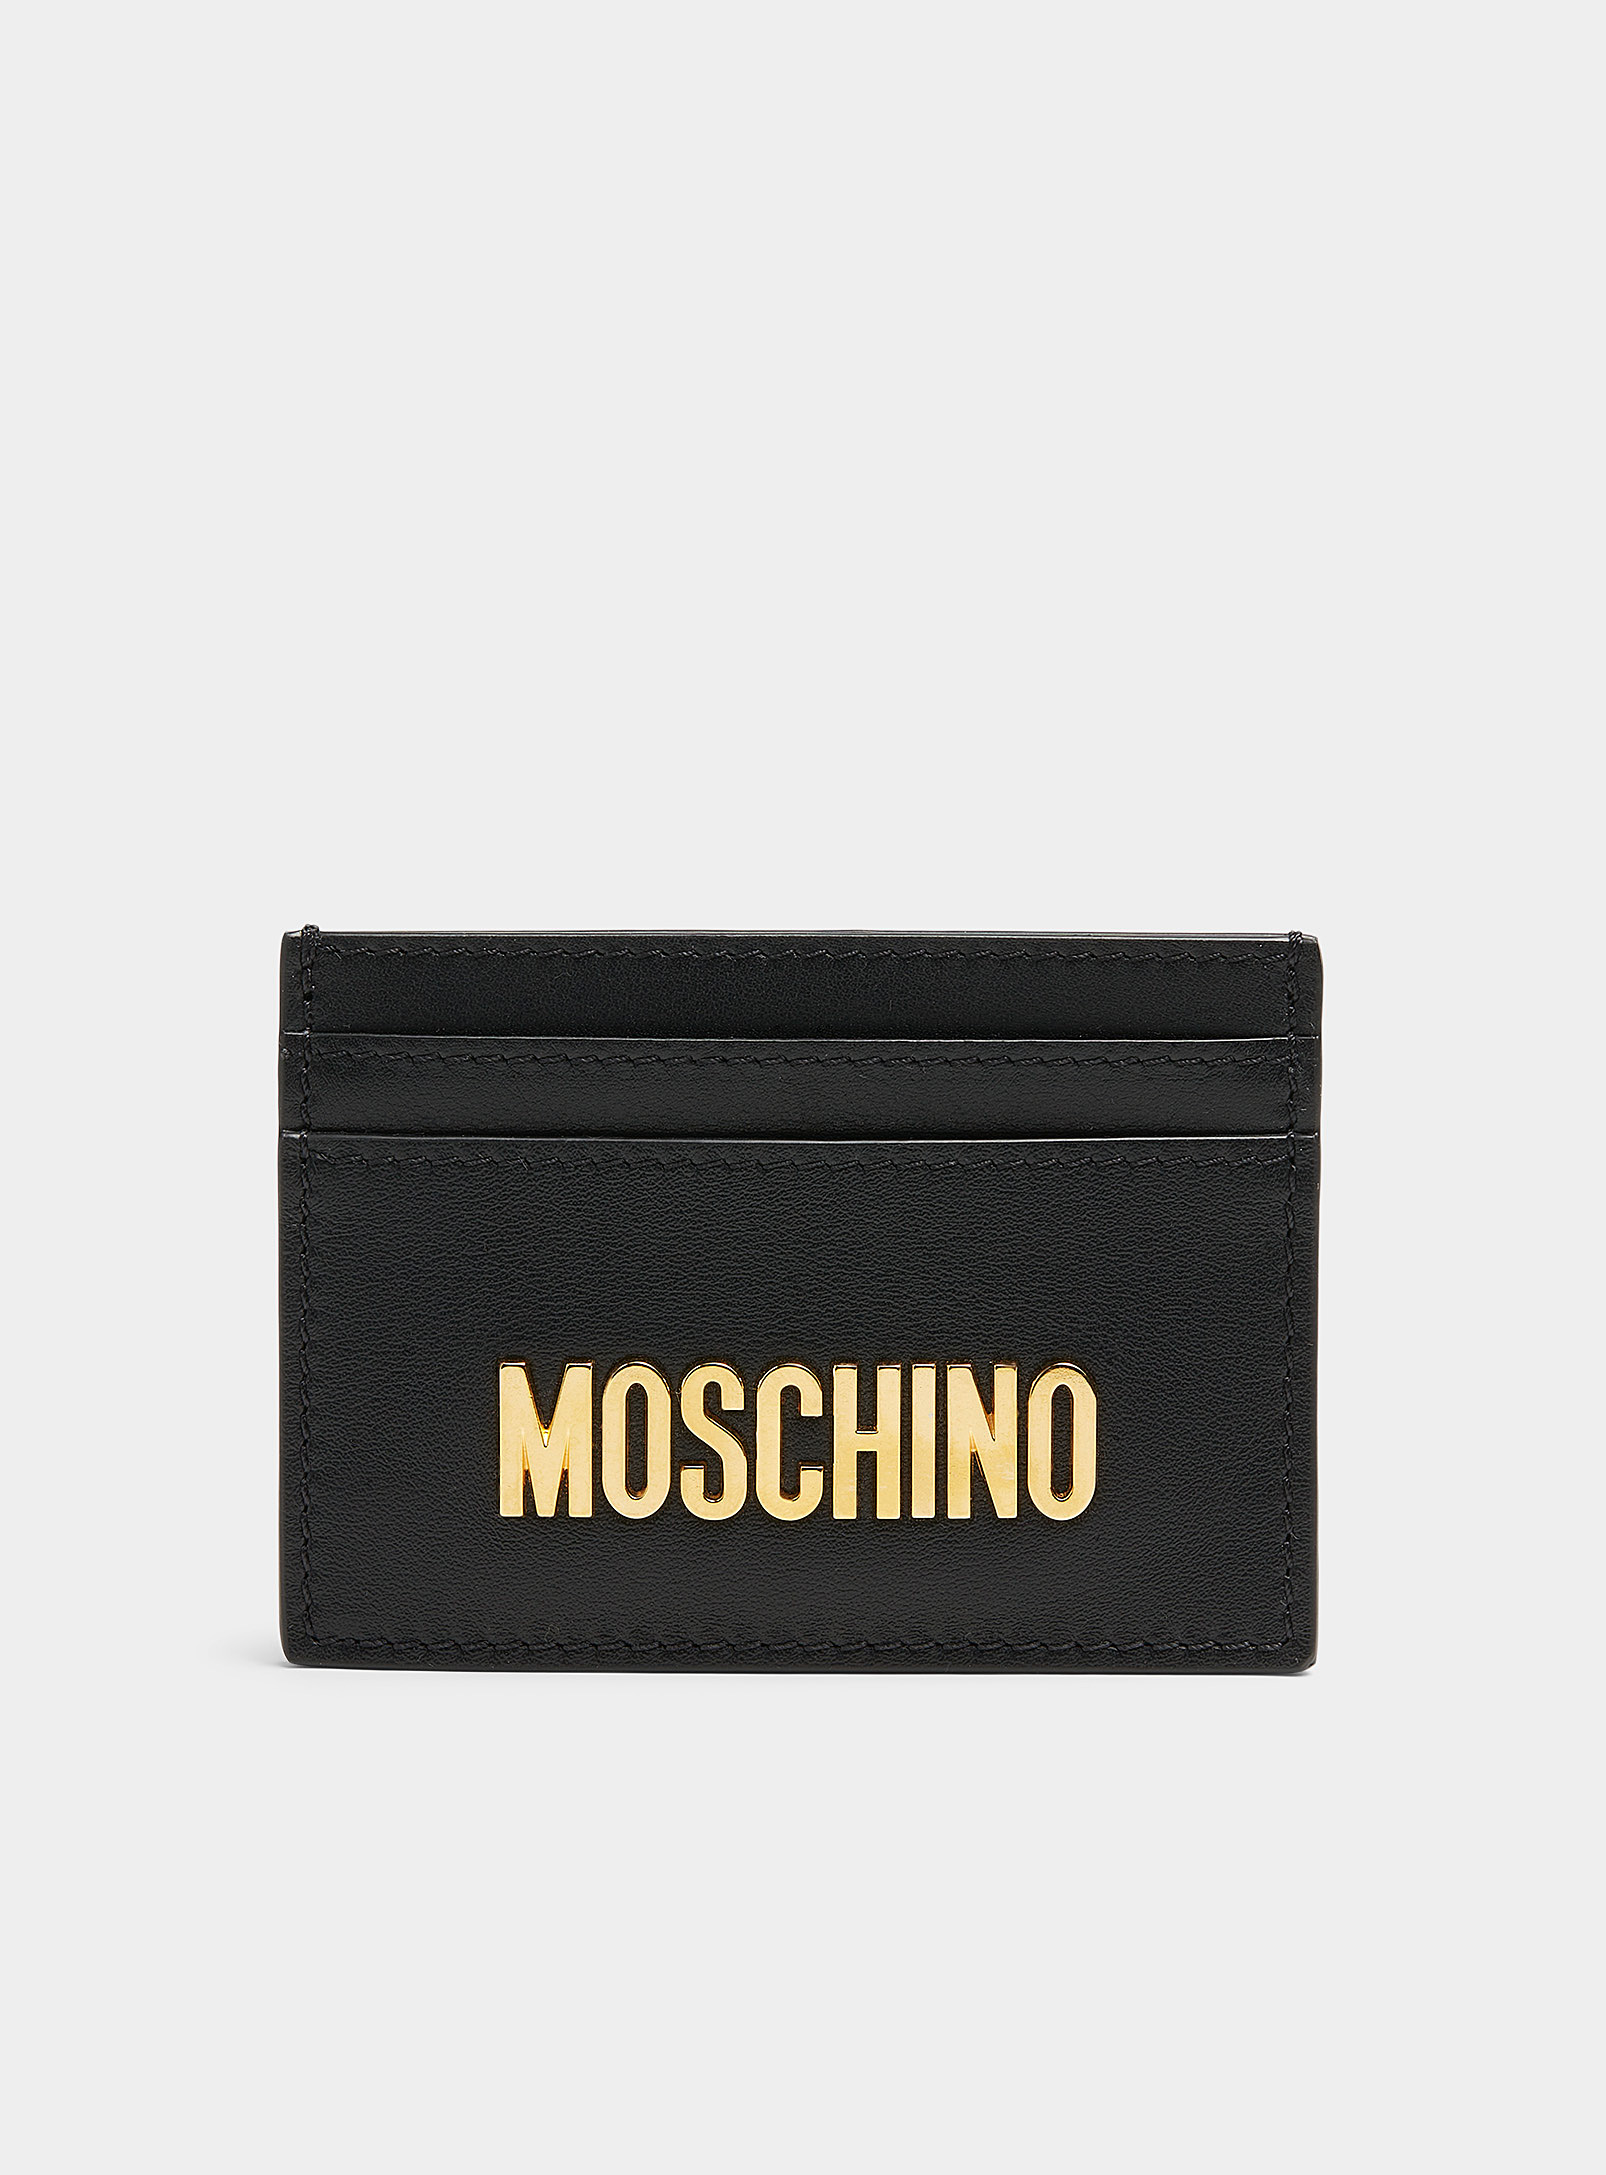 MOSCHINO GOLDEN SIGNATURE BLACK CARD CASE